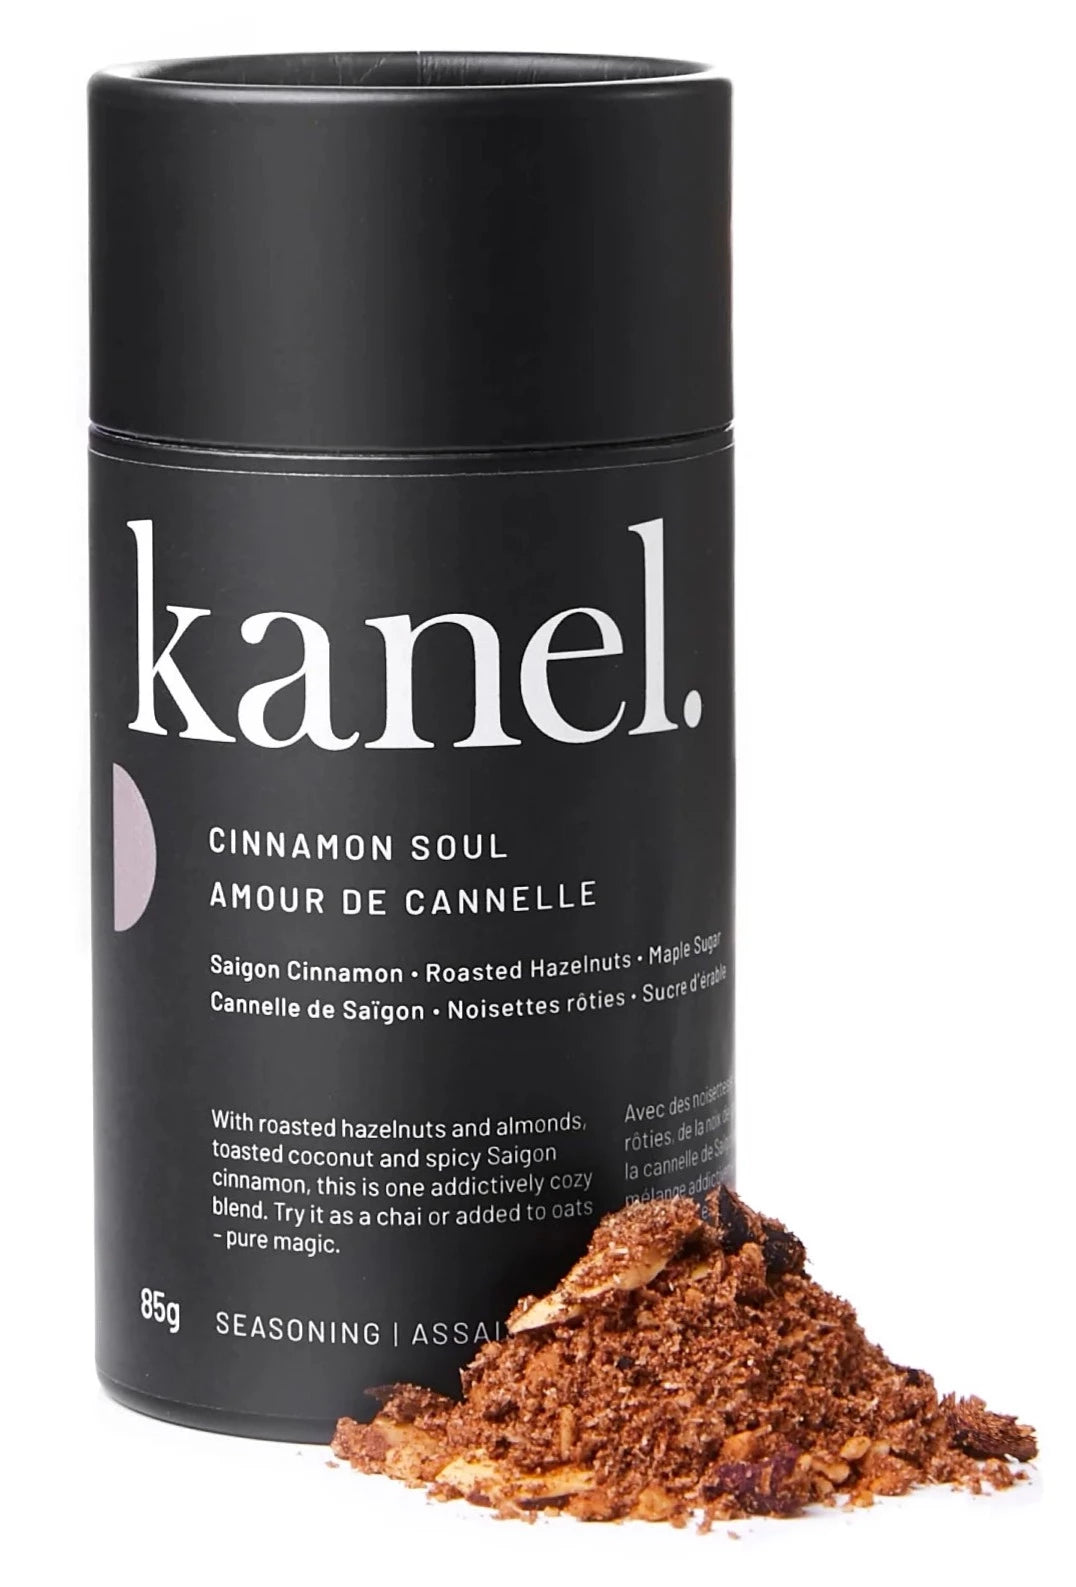 Cannelle Soul par Kanel, 85g